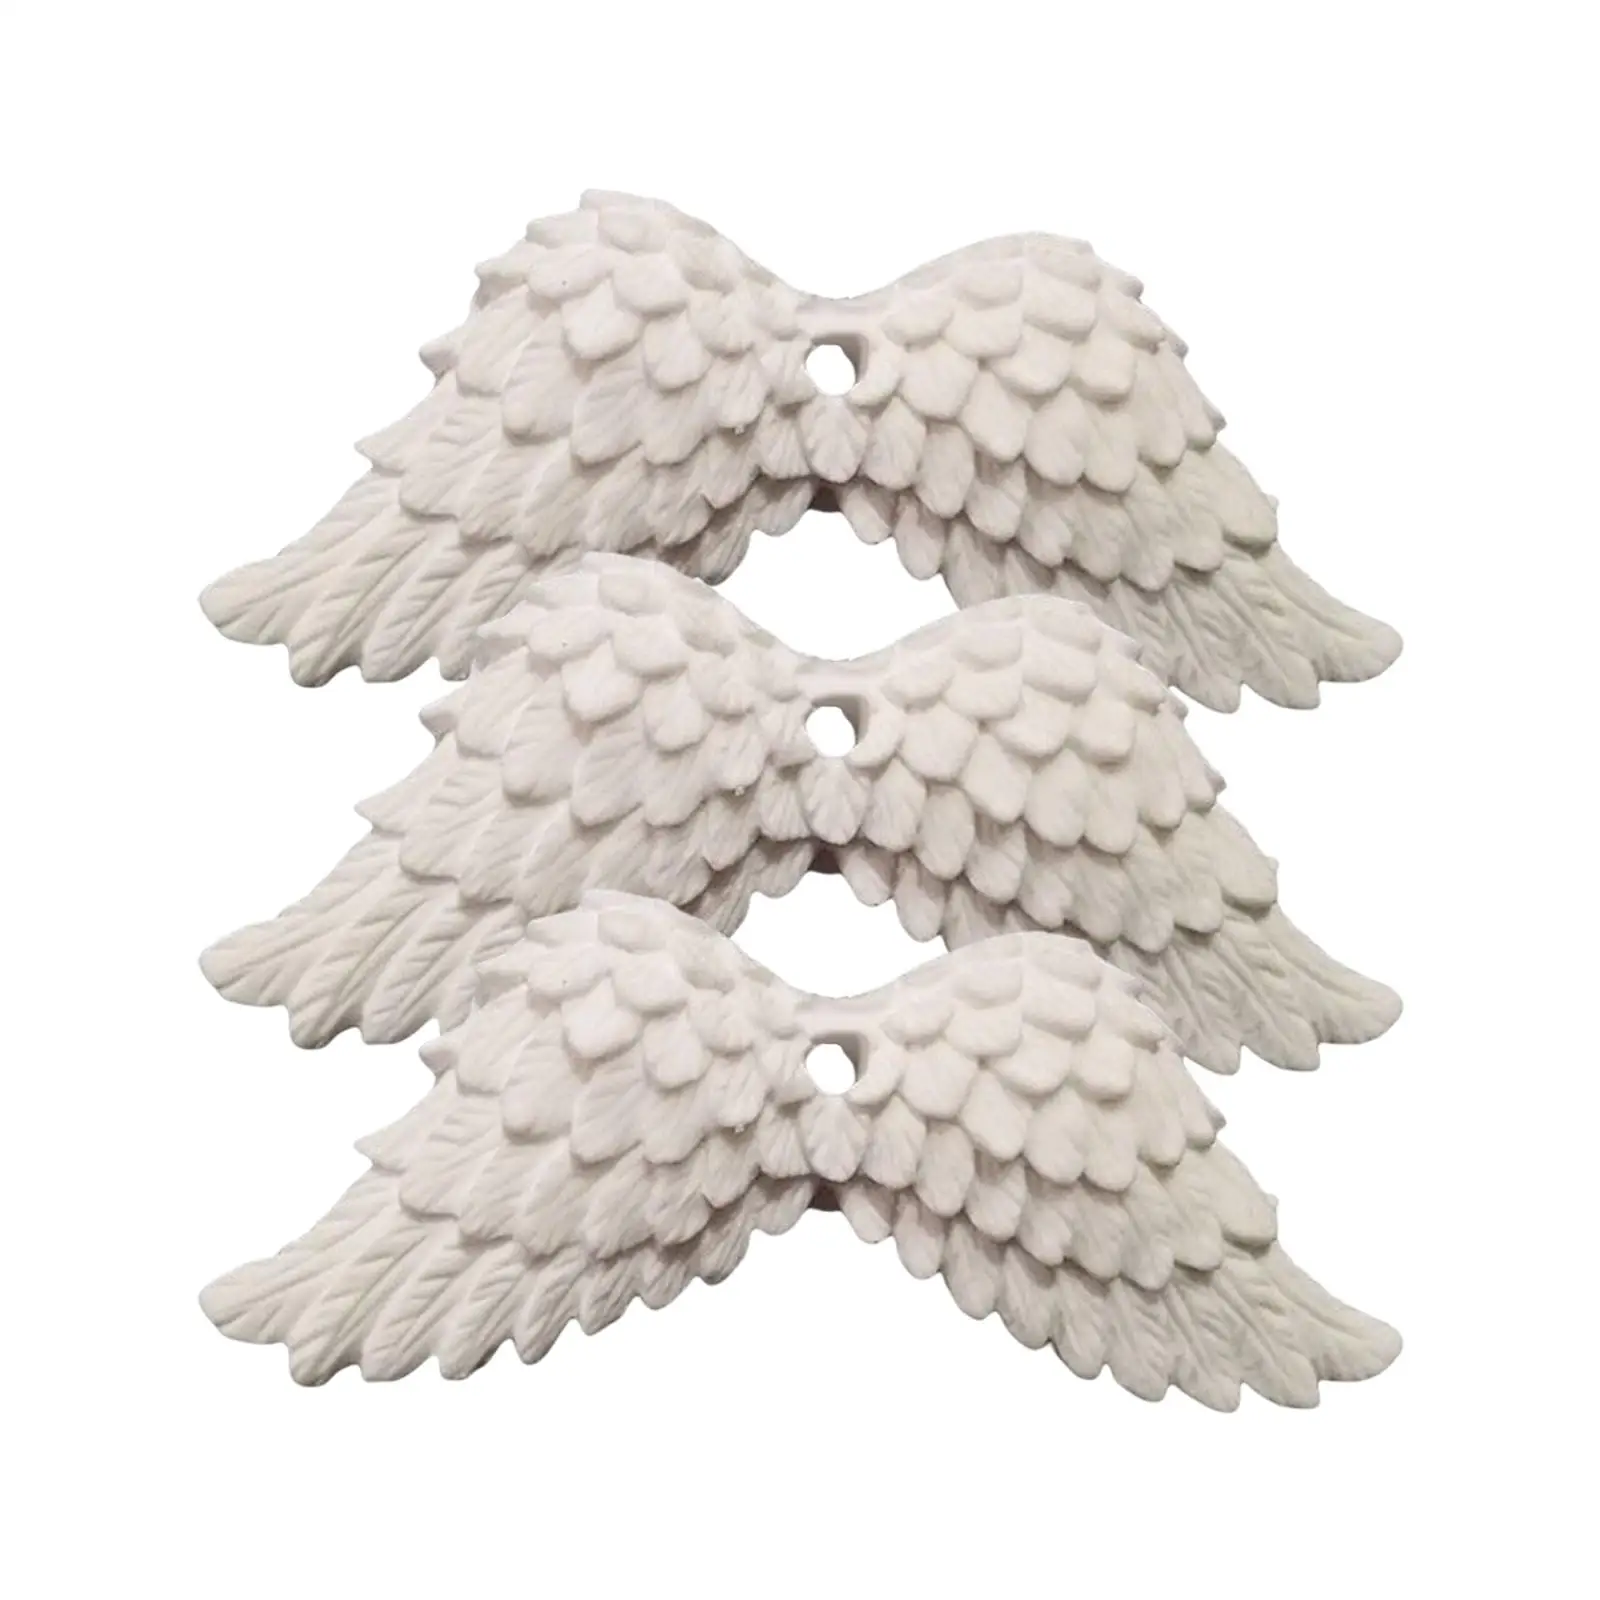 3x Car Wings Pendant Ornament Decoration Simple Diffuser Gypsum for Toilets